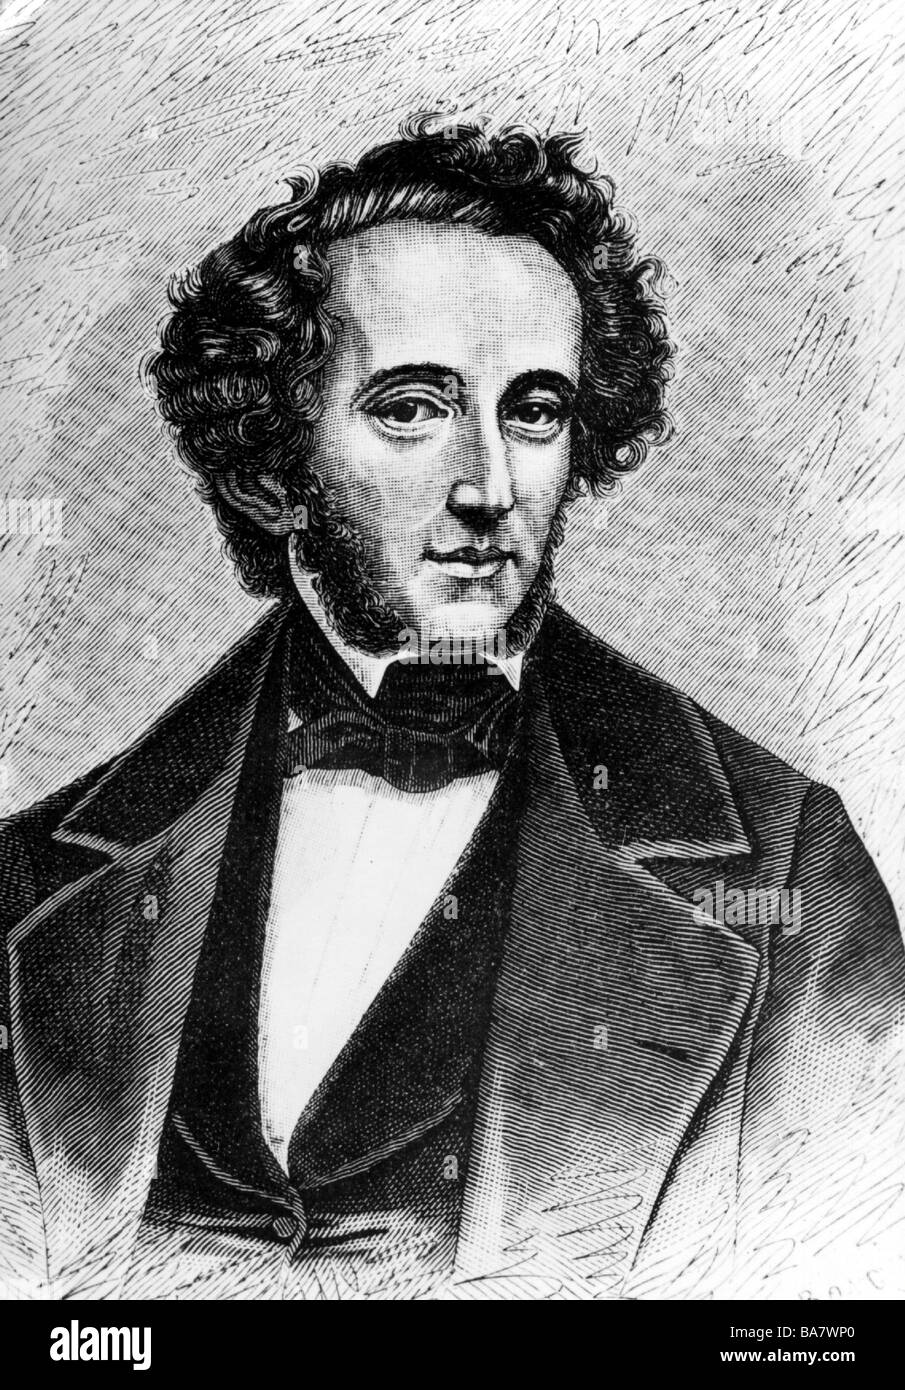 Mendelssohn Bartholdy, Felix 3.2.1809 - 4.11.1847, German musician (composer), portrait, wood engraving, 19th century, Stock Photo